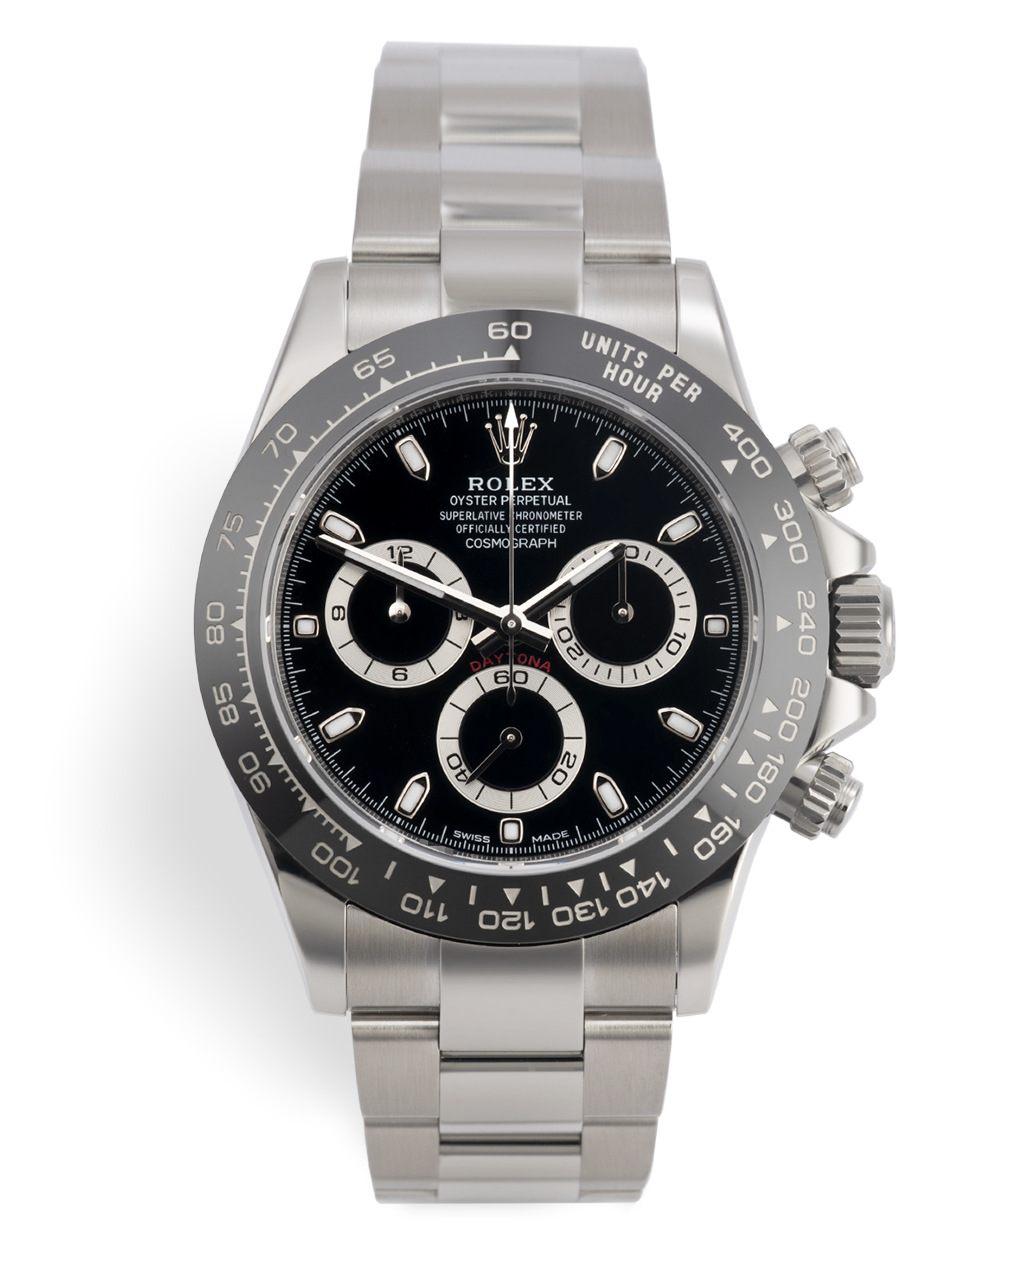 Rolex Cosmograph Daytona Watches | ref 116500LN | Box & Certificate ...